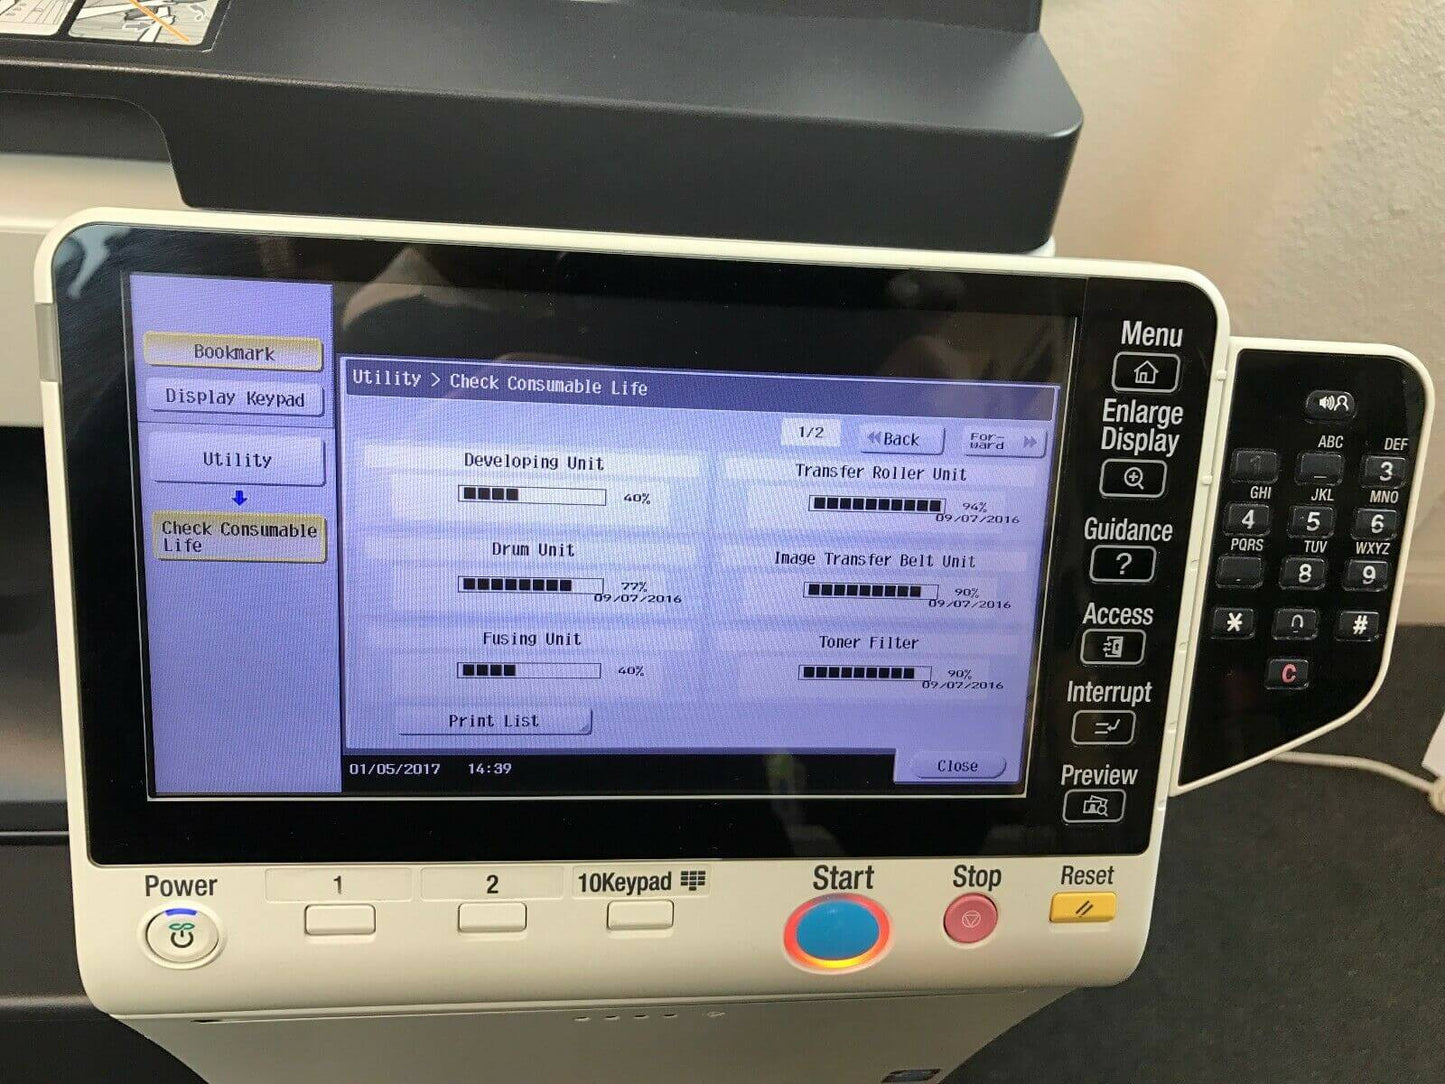 Konica Minolta Bizhub 454e Black & White Copier Printer Scanner Fax Finisher - copier-clearance-center